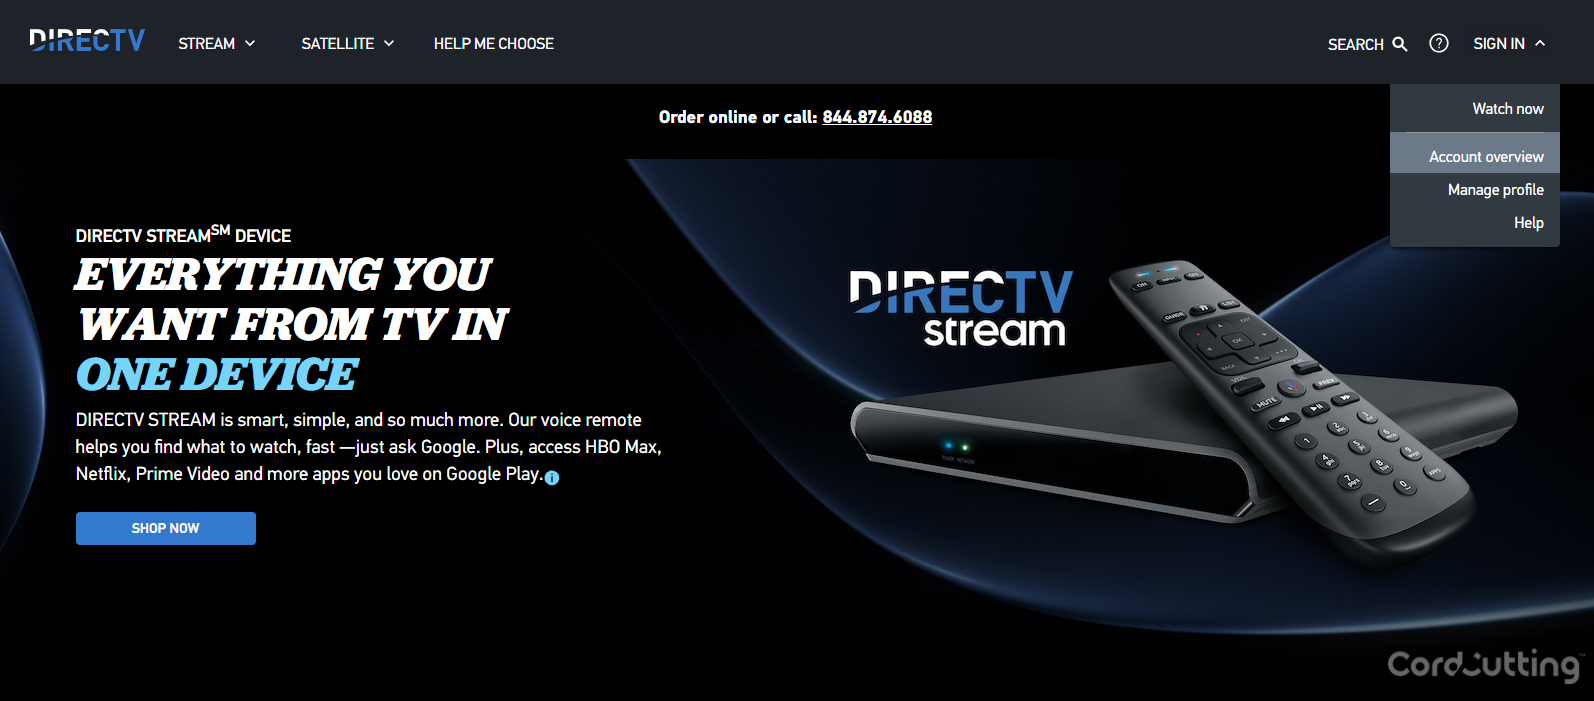 DIRECTV Stream Account Overview access screen